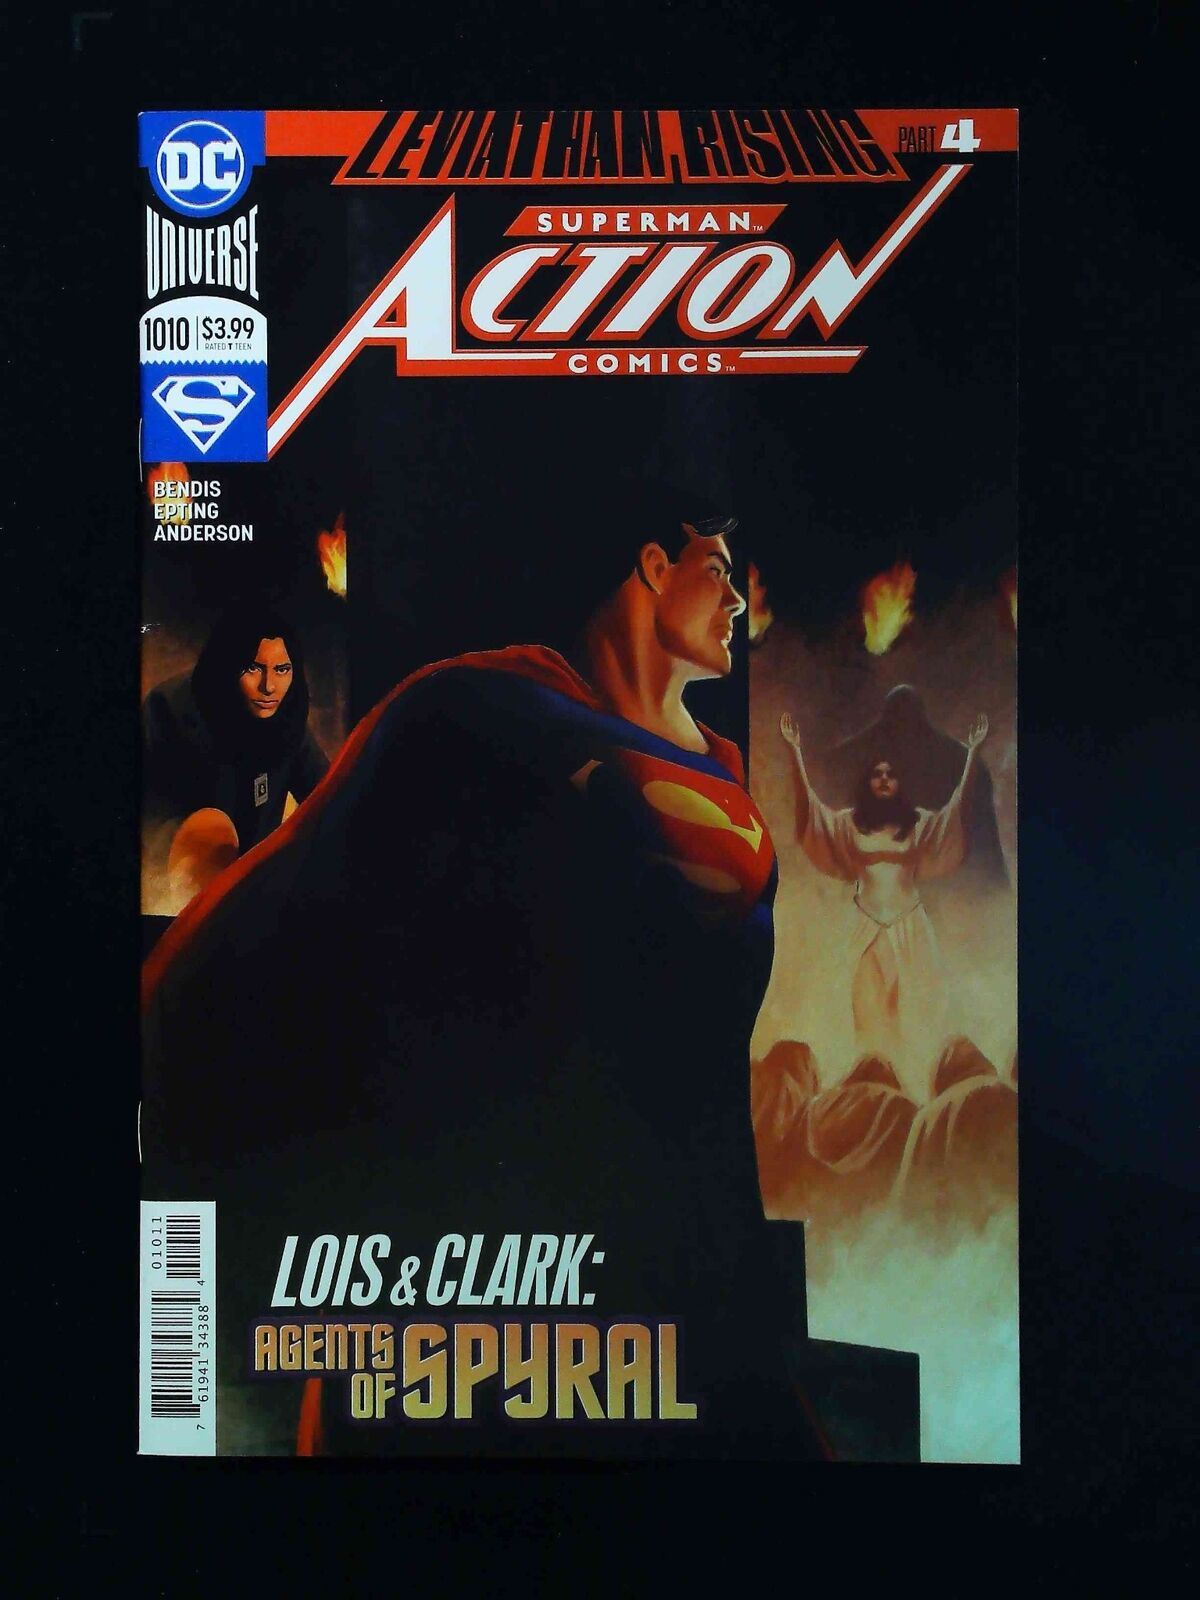 Action Comics #1010 (3Rd Series) Dc Comics 2019 Vf+